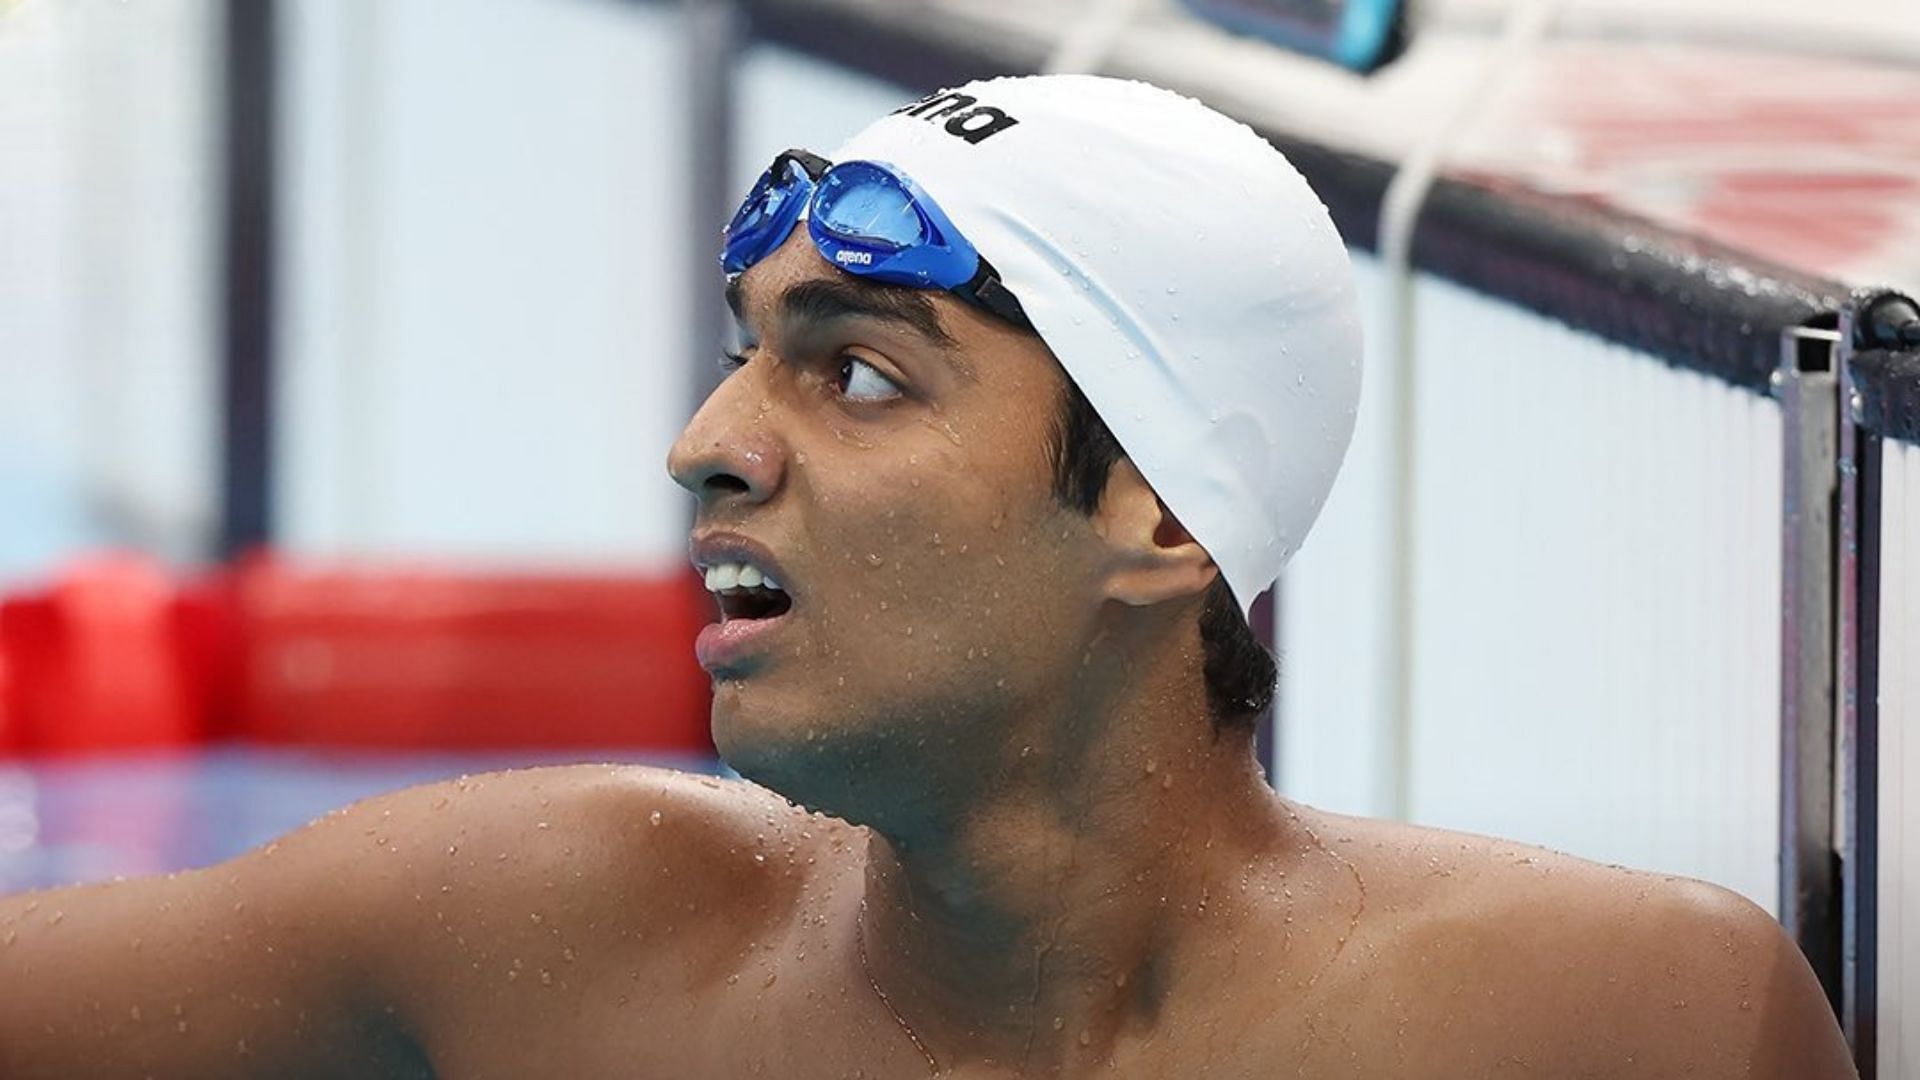 <div class="paragraphs"><p>Indian Swimmer&nbsp;Srihari Nataraj at CWG 2022</p></div>